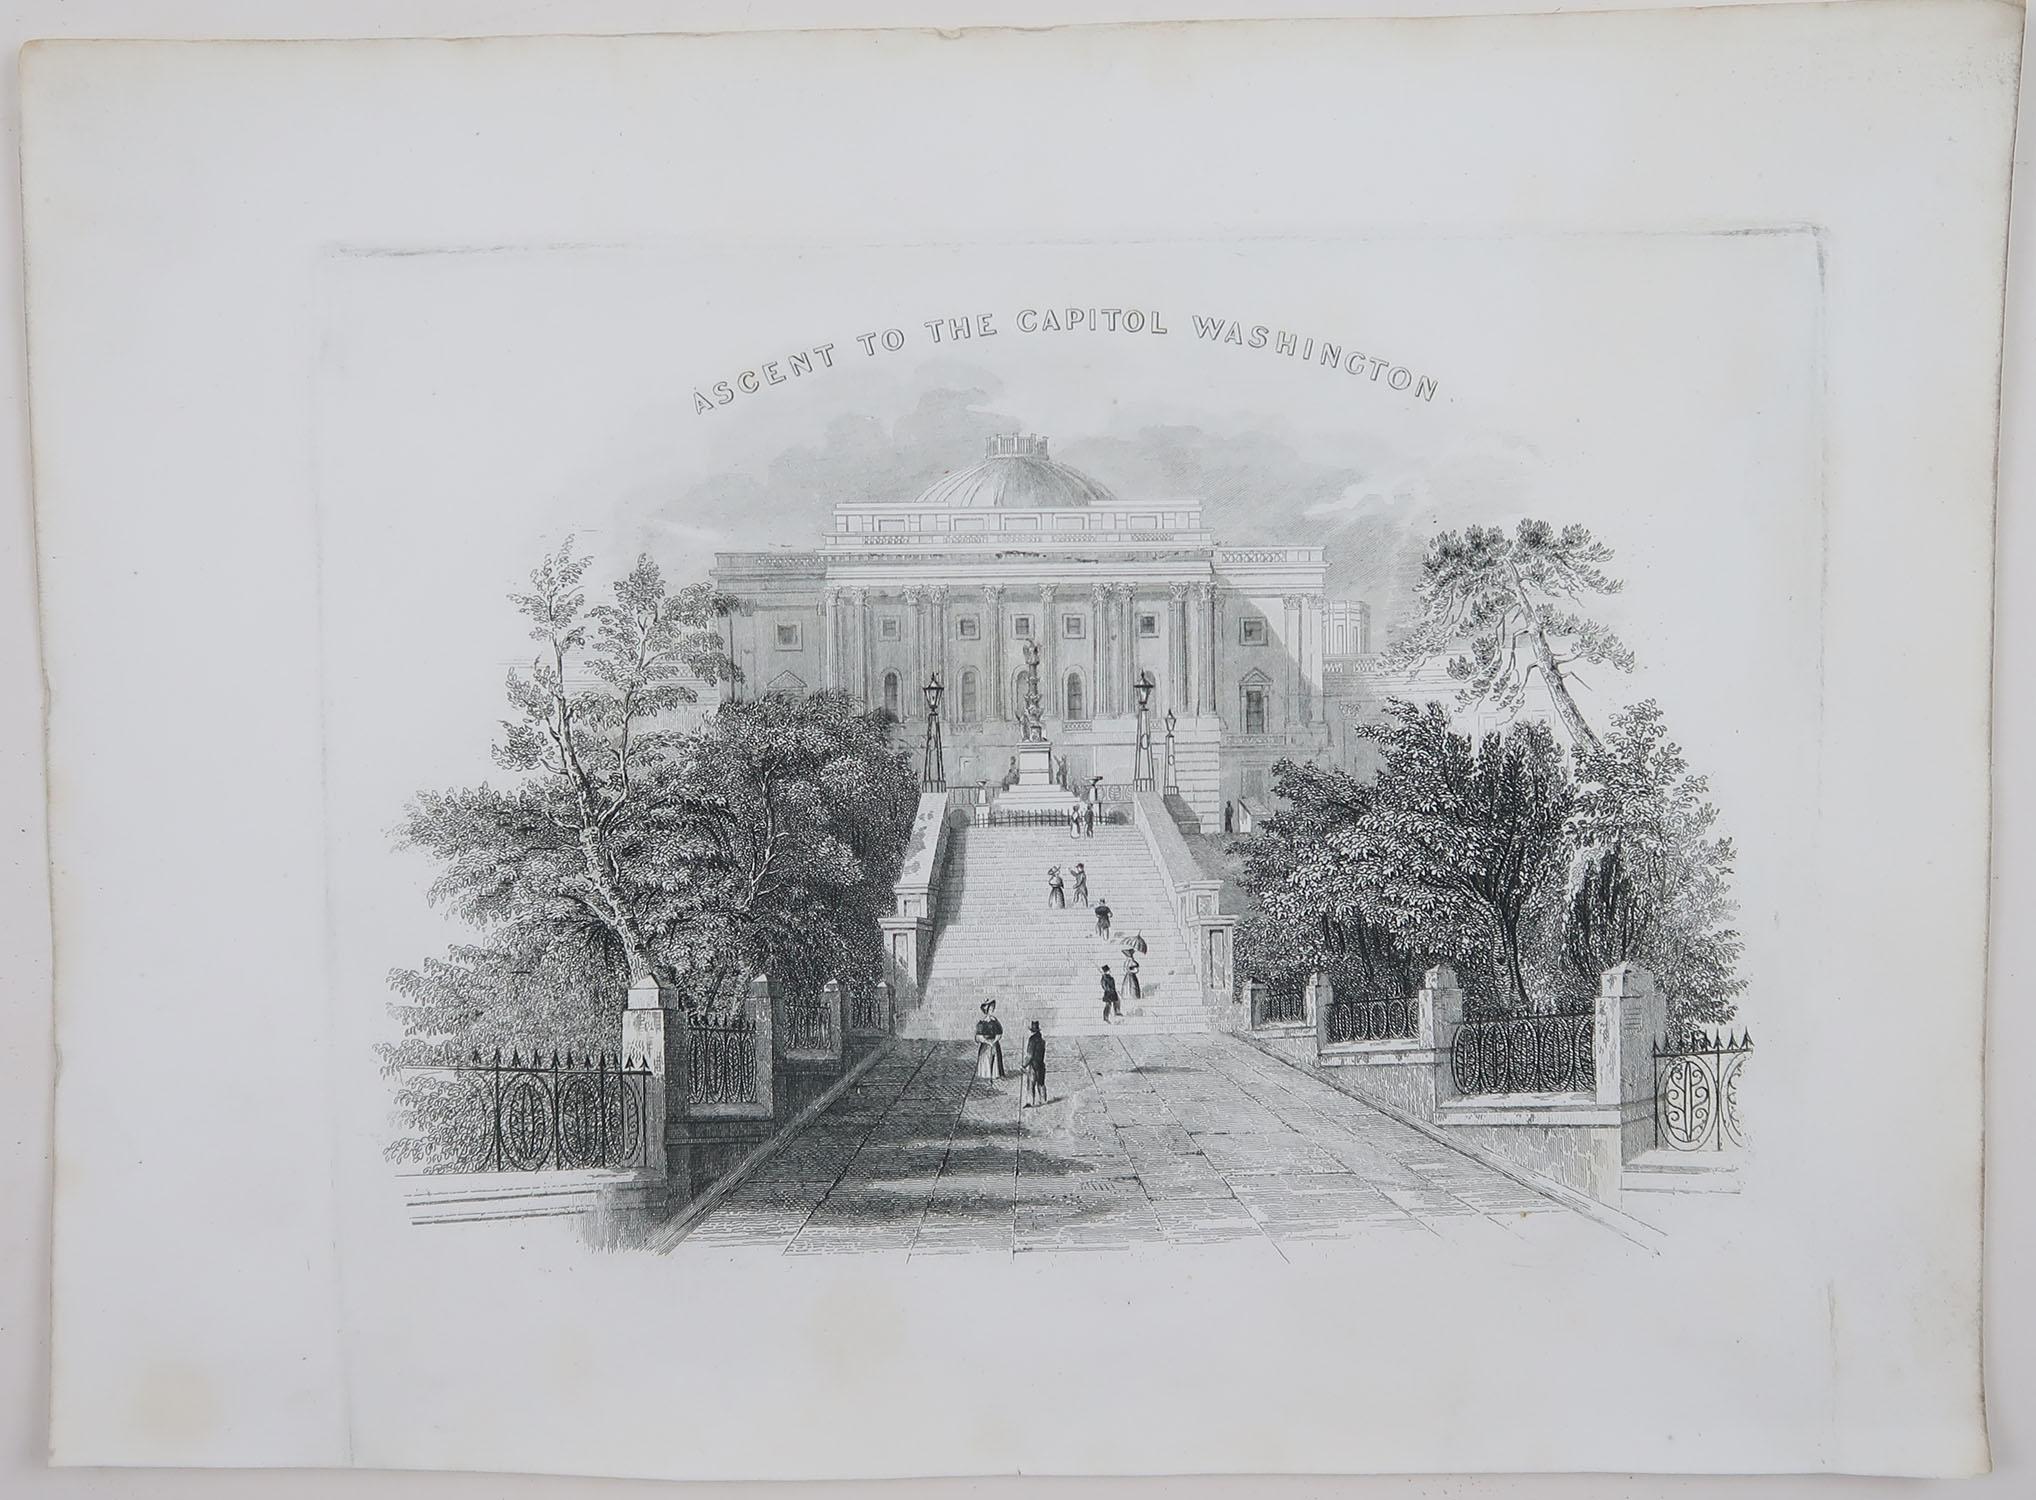 Other Original Antique Print of The US Capitol Building, Washington DC., 1827